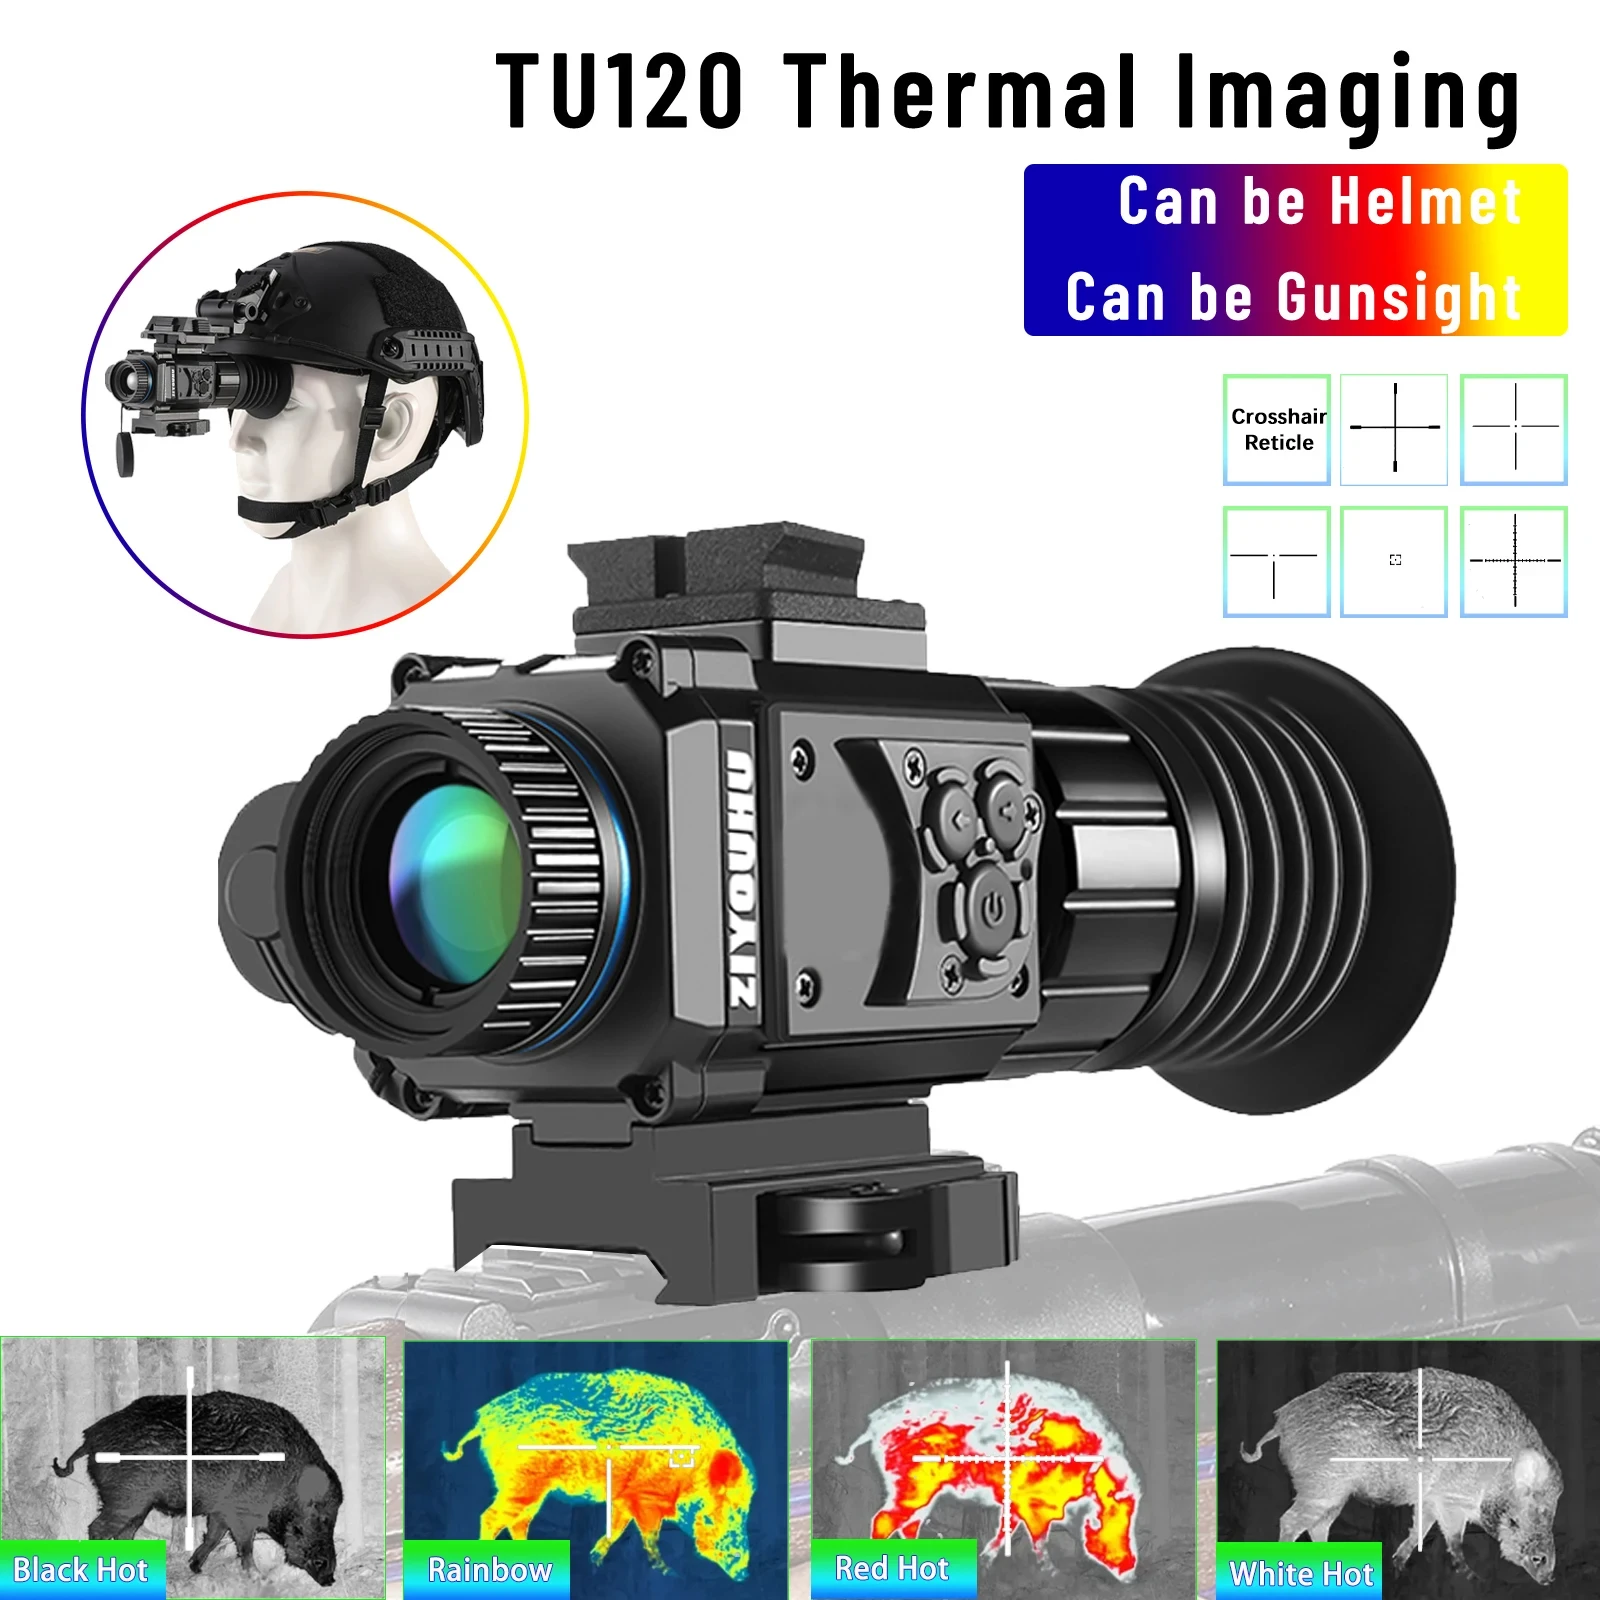 

TU120 Infrared Heat Monocular Hunting 8x Magnification Riflescope Aiming Cross Cursor Helmet Head Mounted Thermal Imaging Scope